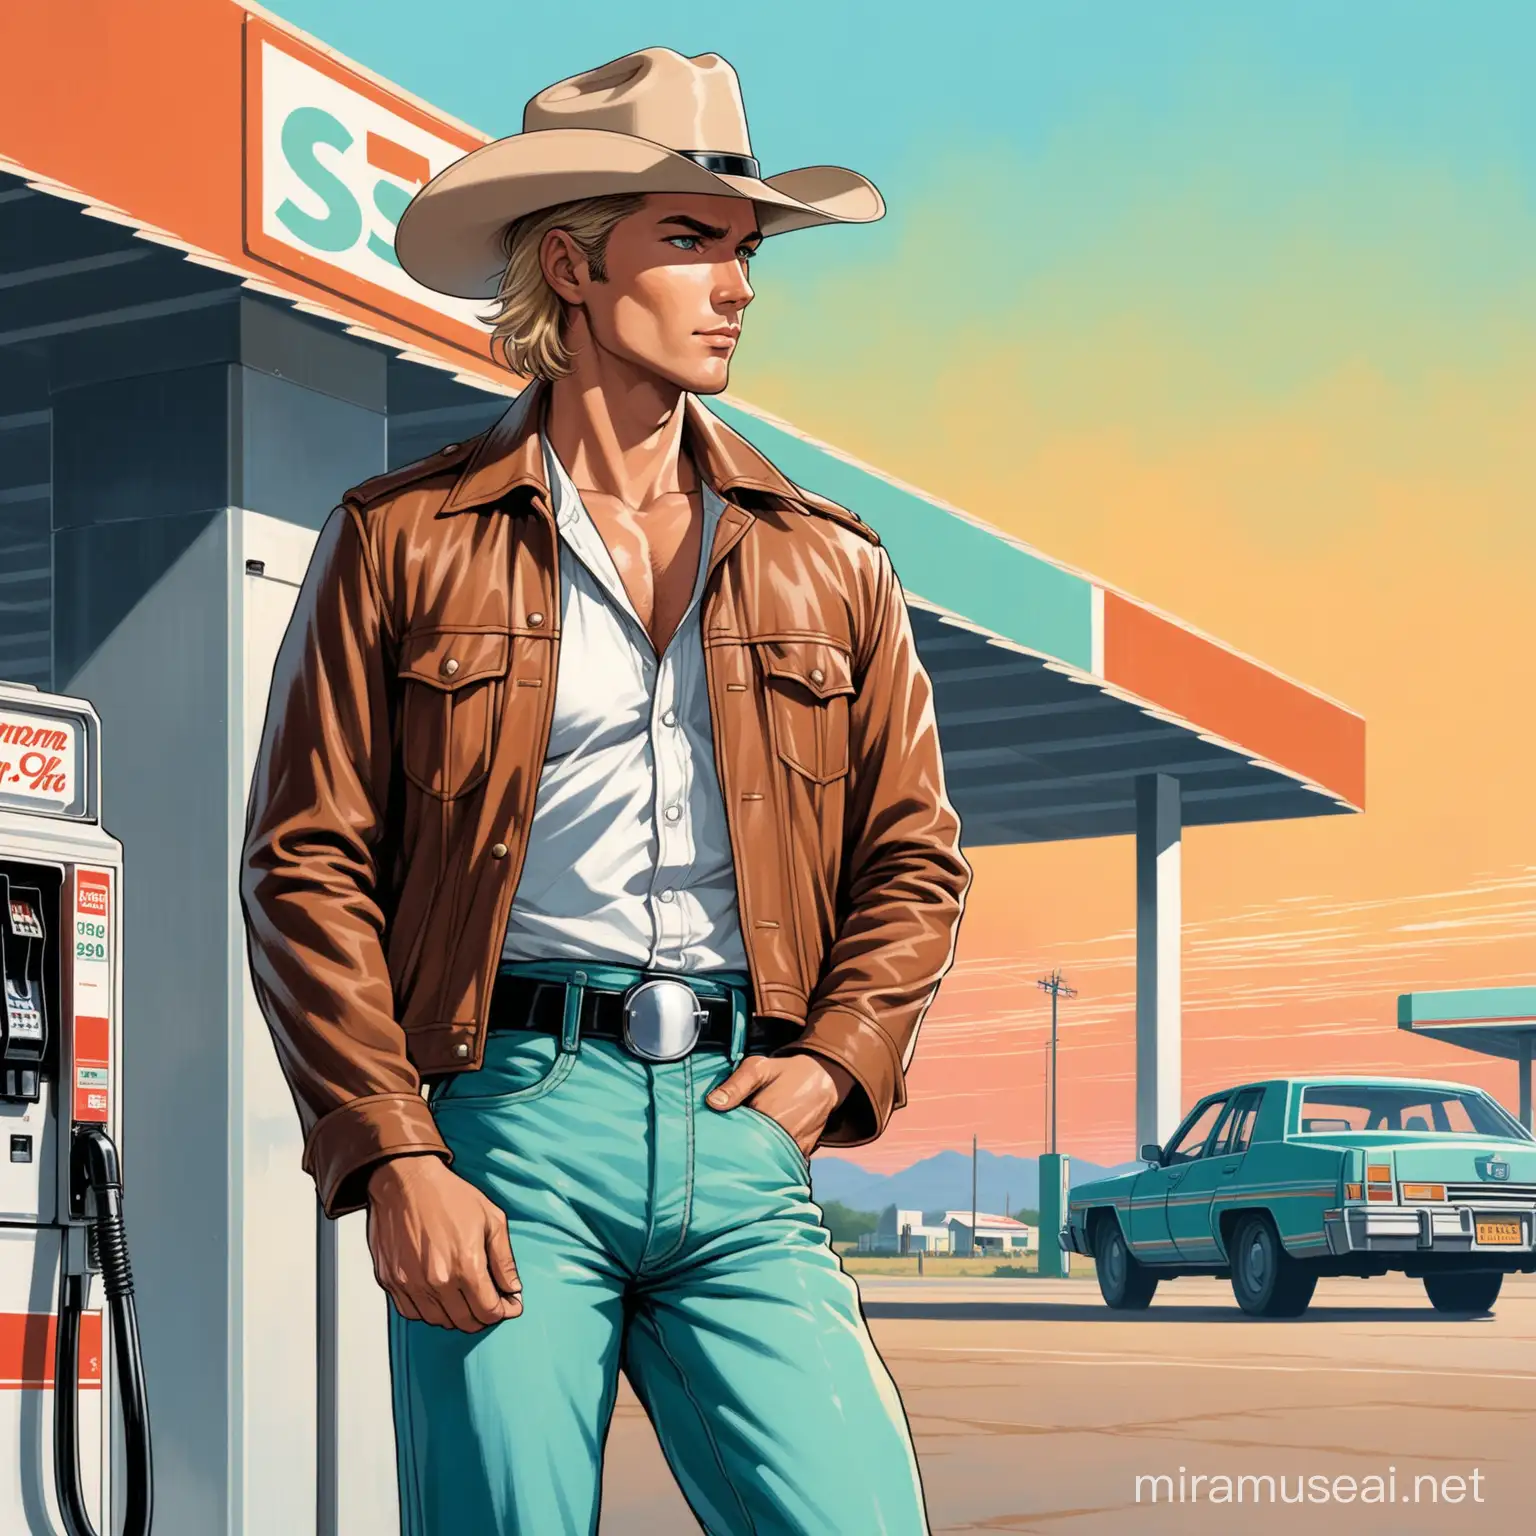 1980s Texas Policeman Enjoying Soda at Gas Station under Dawn Sun